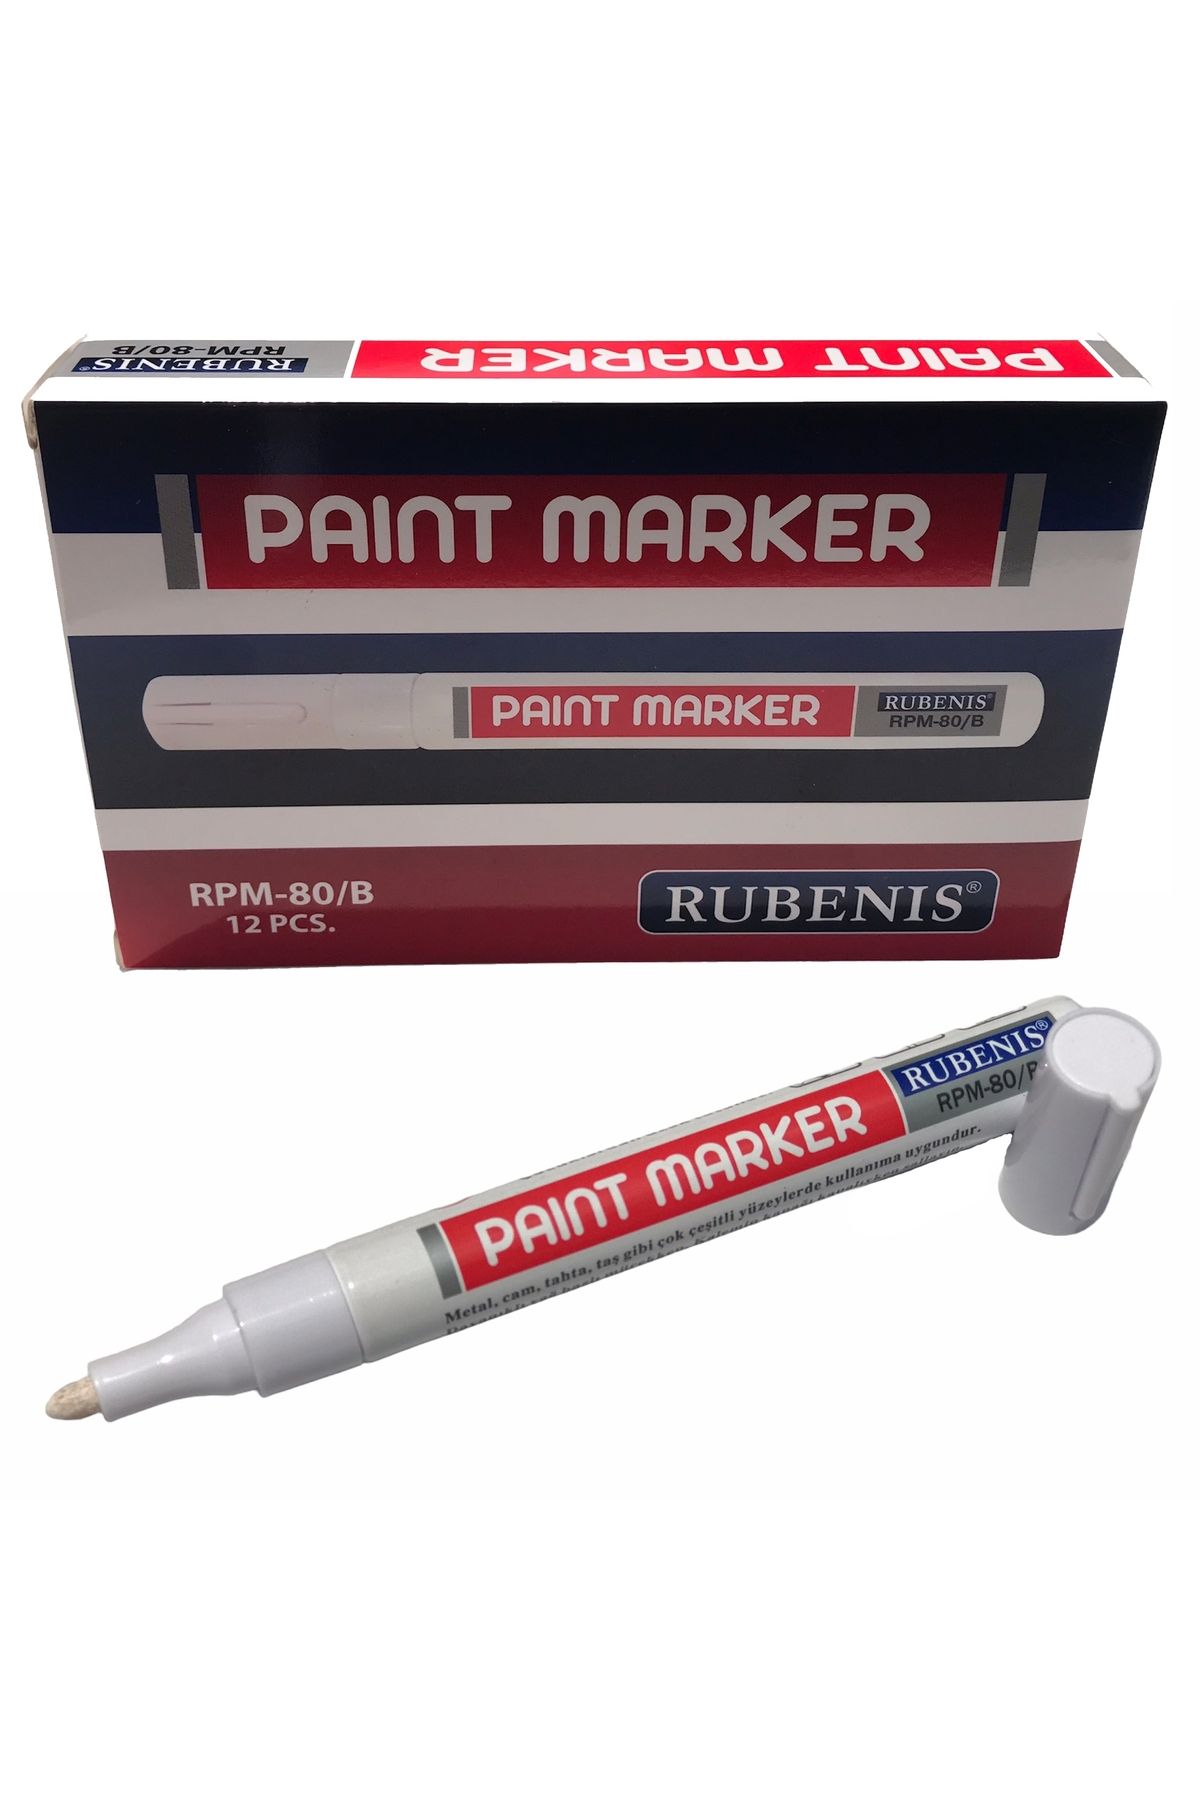 Rubenis Paint Marker Kalem Beyaz Renk Rpm 80/b (ADET)